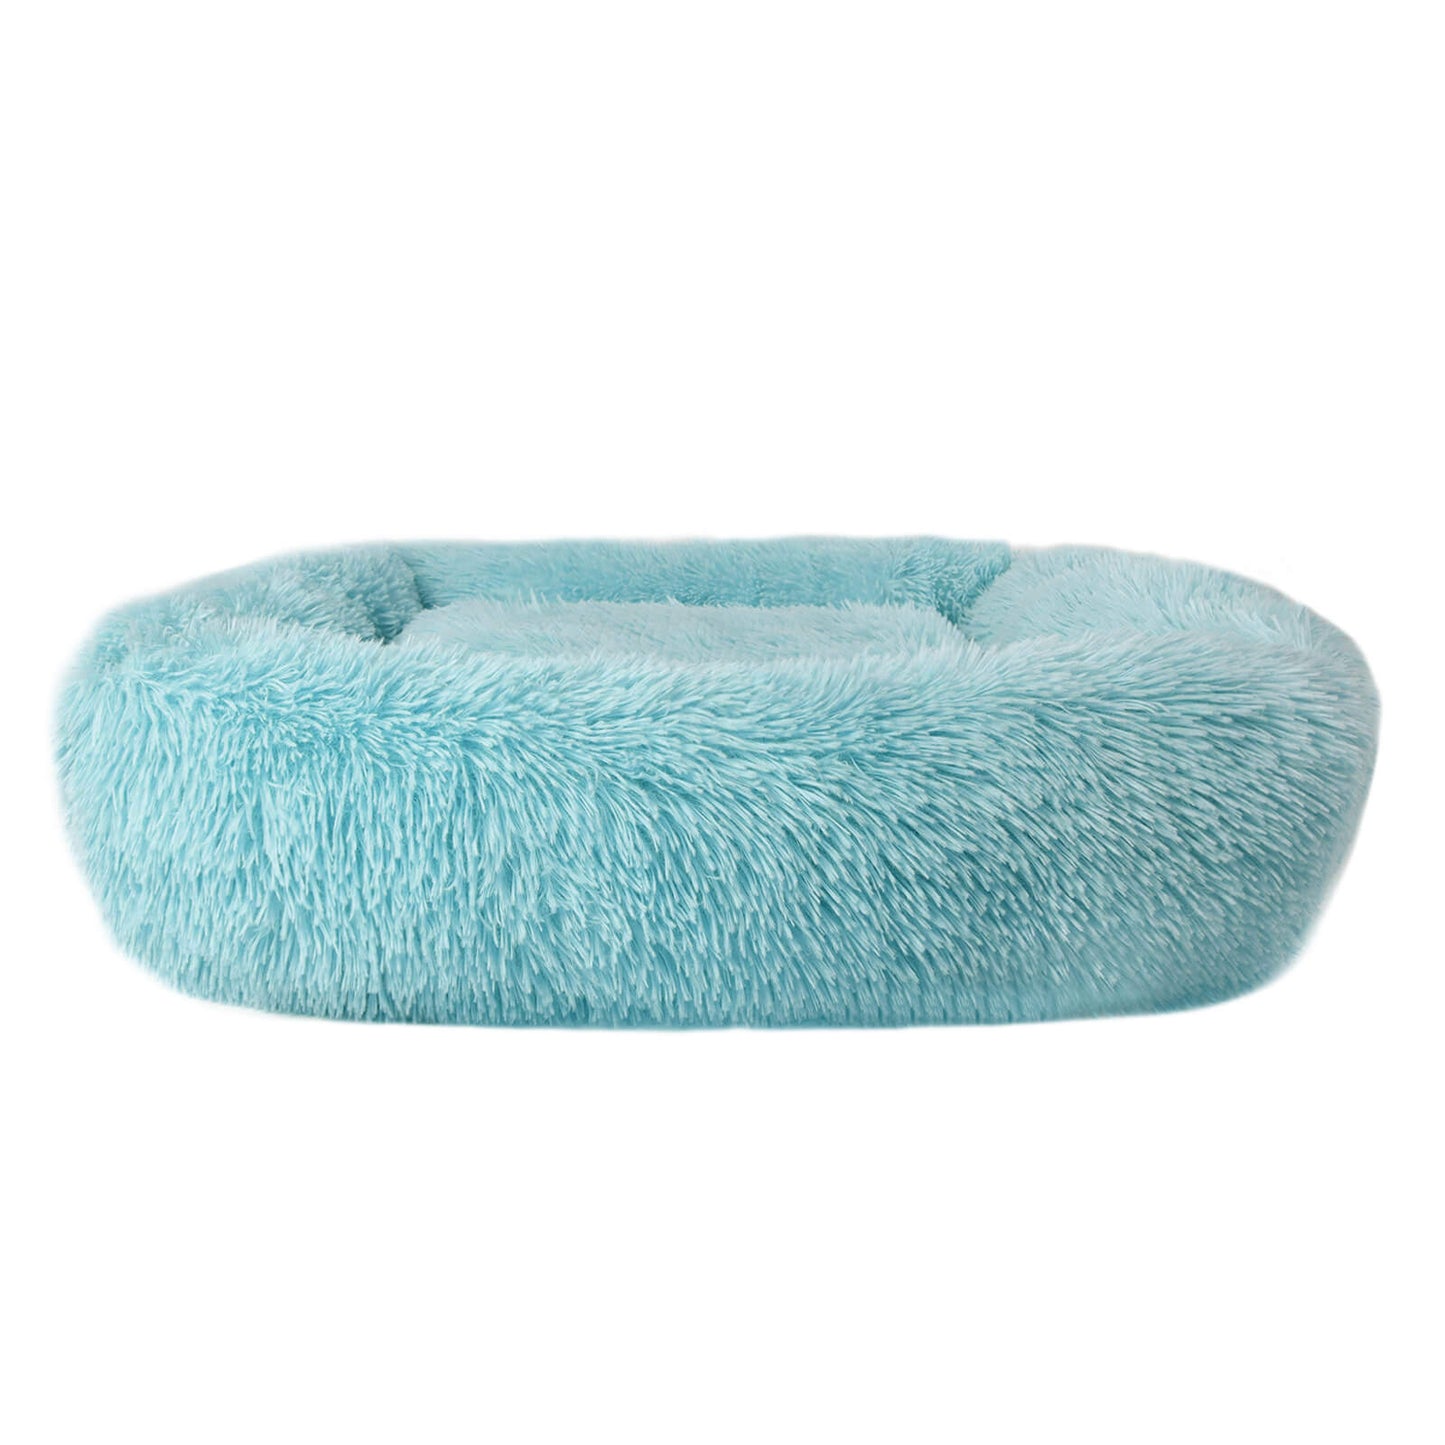 Soft Plush Orthopedic Pet Bed Slepping Mat Cushion for Small Large Dog Cat